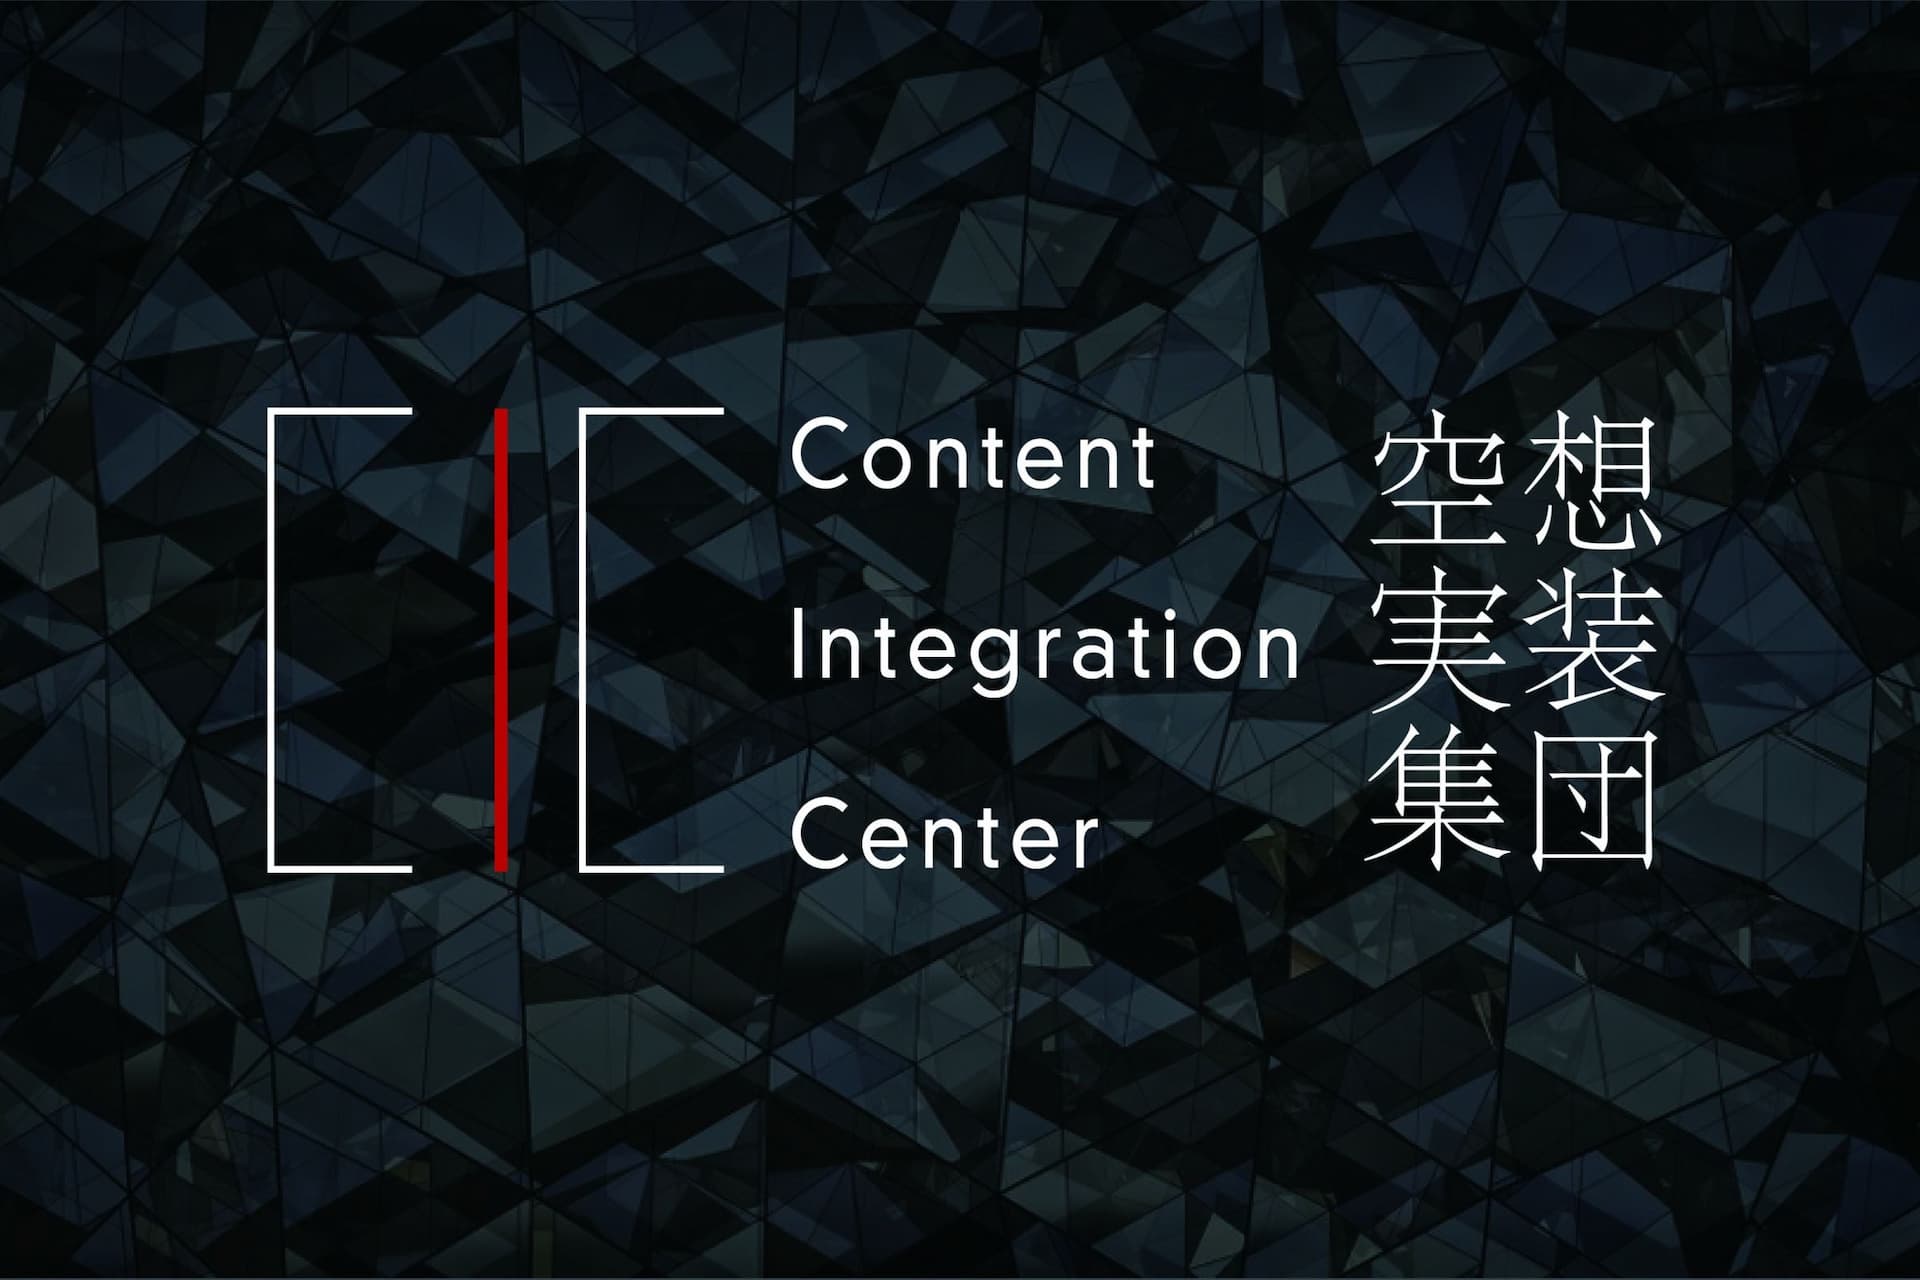 CIC （Content Integration Center：空想実装集団）